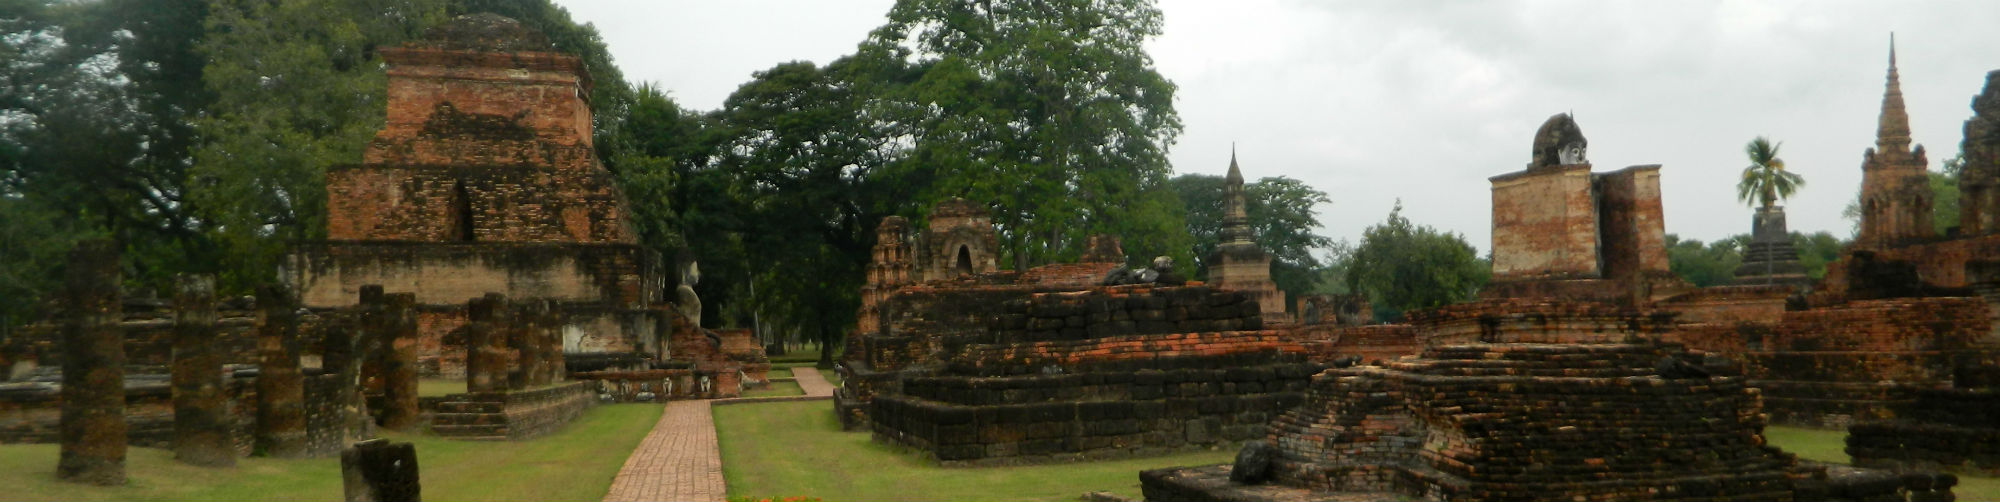 Wat Mahathat, Sukhothai Historic Park, Sukhothai Province